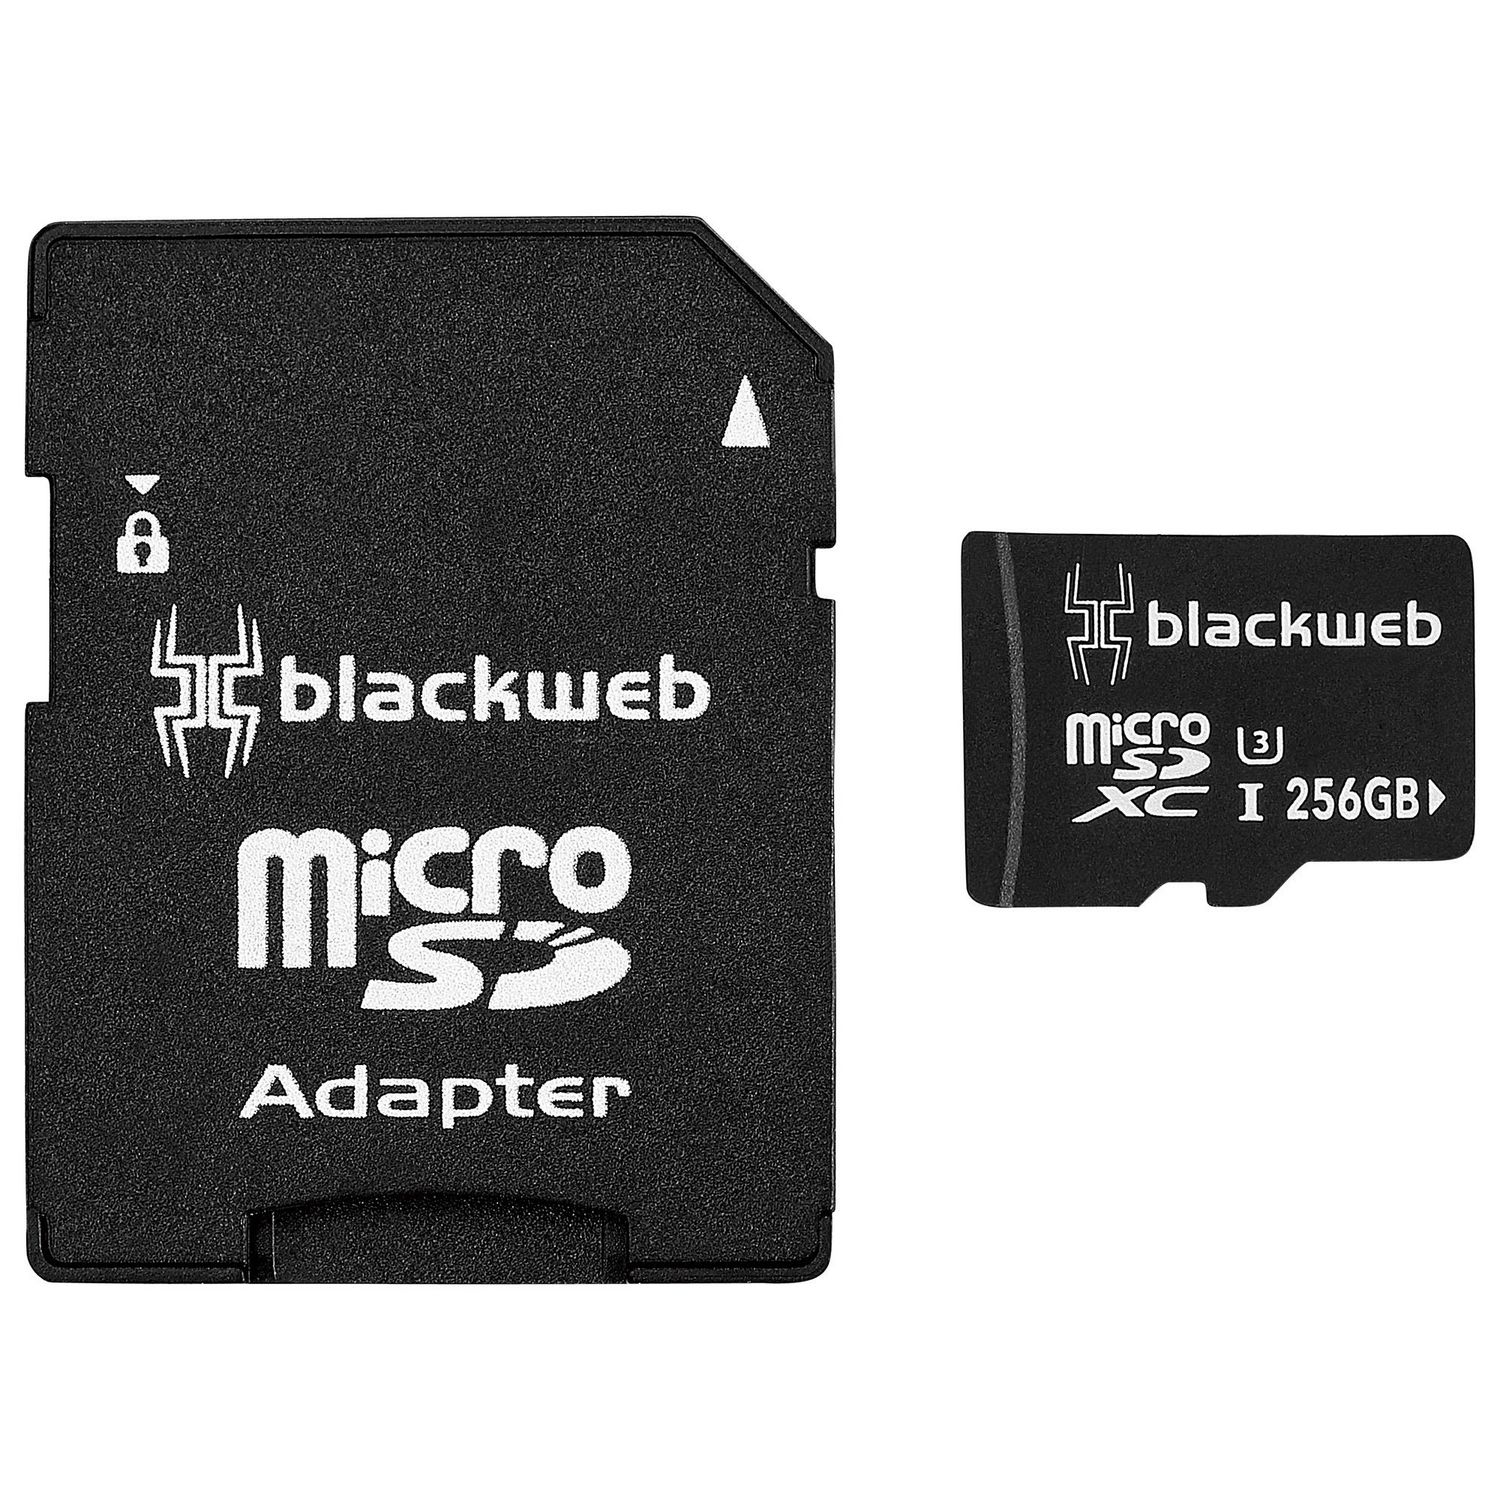 Carte SanDiskMD microSDXCMC pour Nintendo SwitchMC de 256 Go MicroSDXC 256Go  